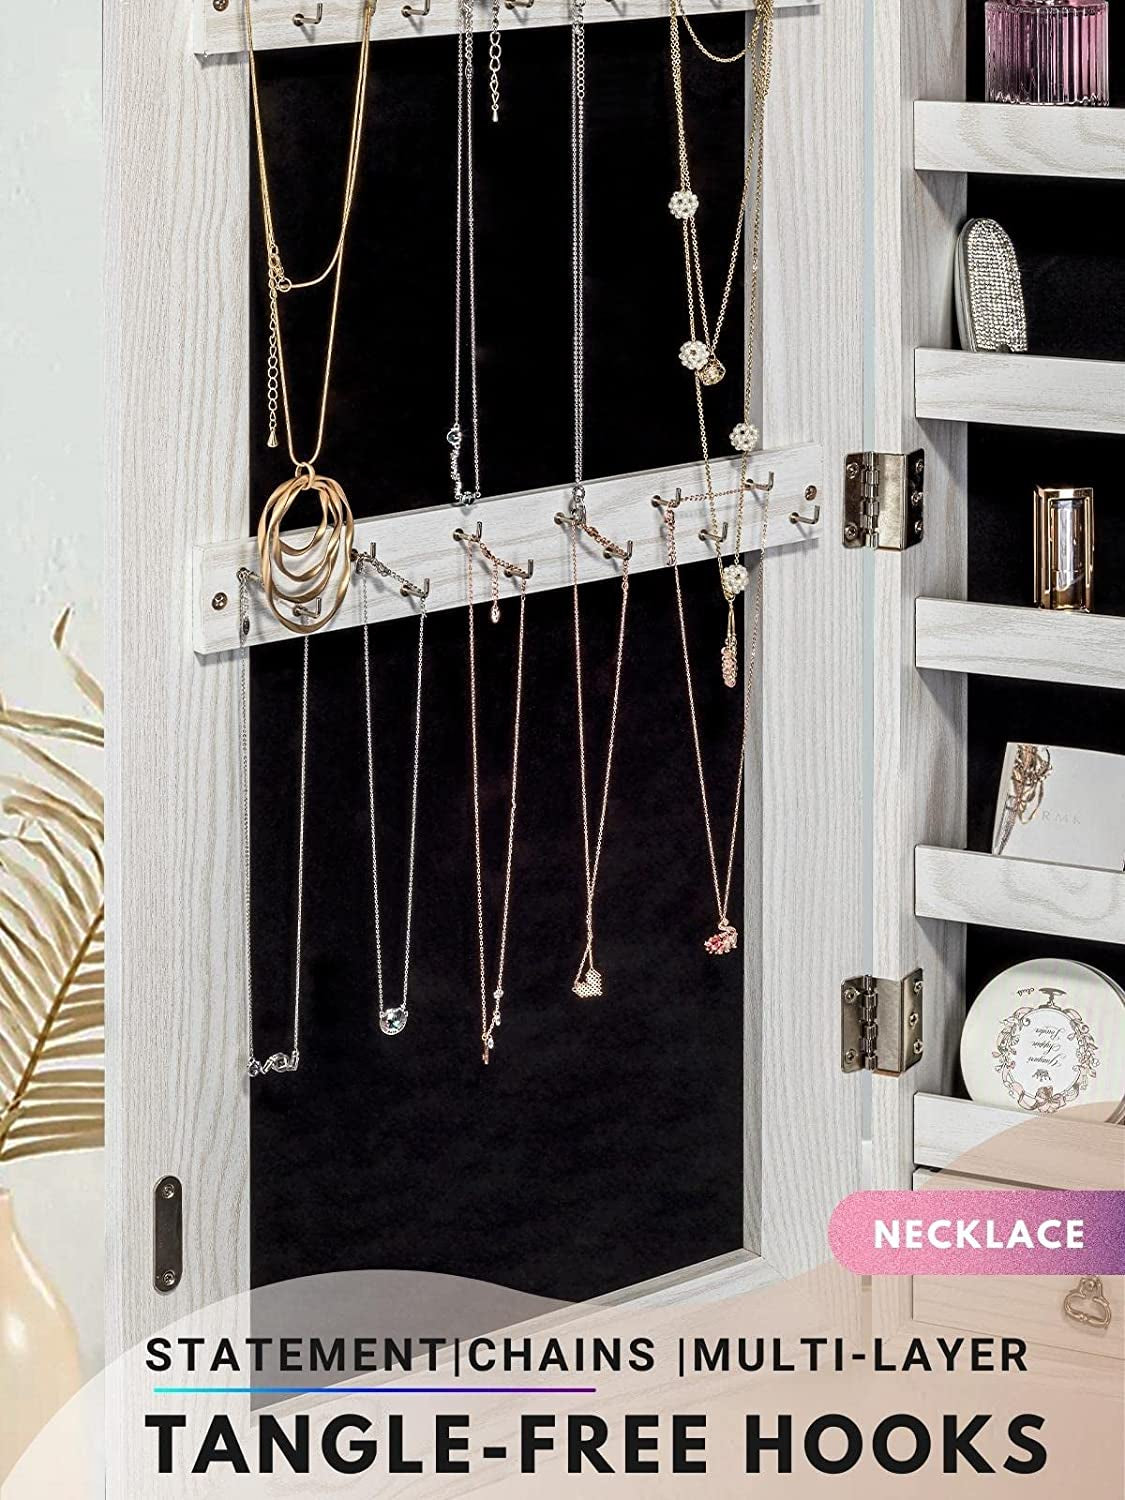 YOKUKINA Jewelry Mirror Cabinet, Large Storage Organizer W/ LED Light, Door-Hanging/ Wall-Mounted Lockable Armoire (Ivory)